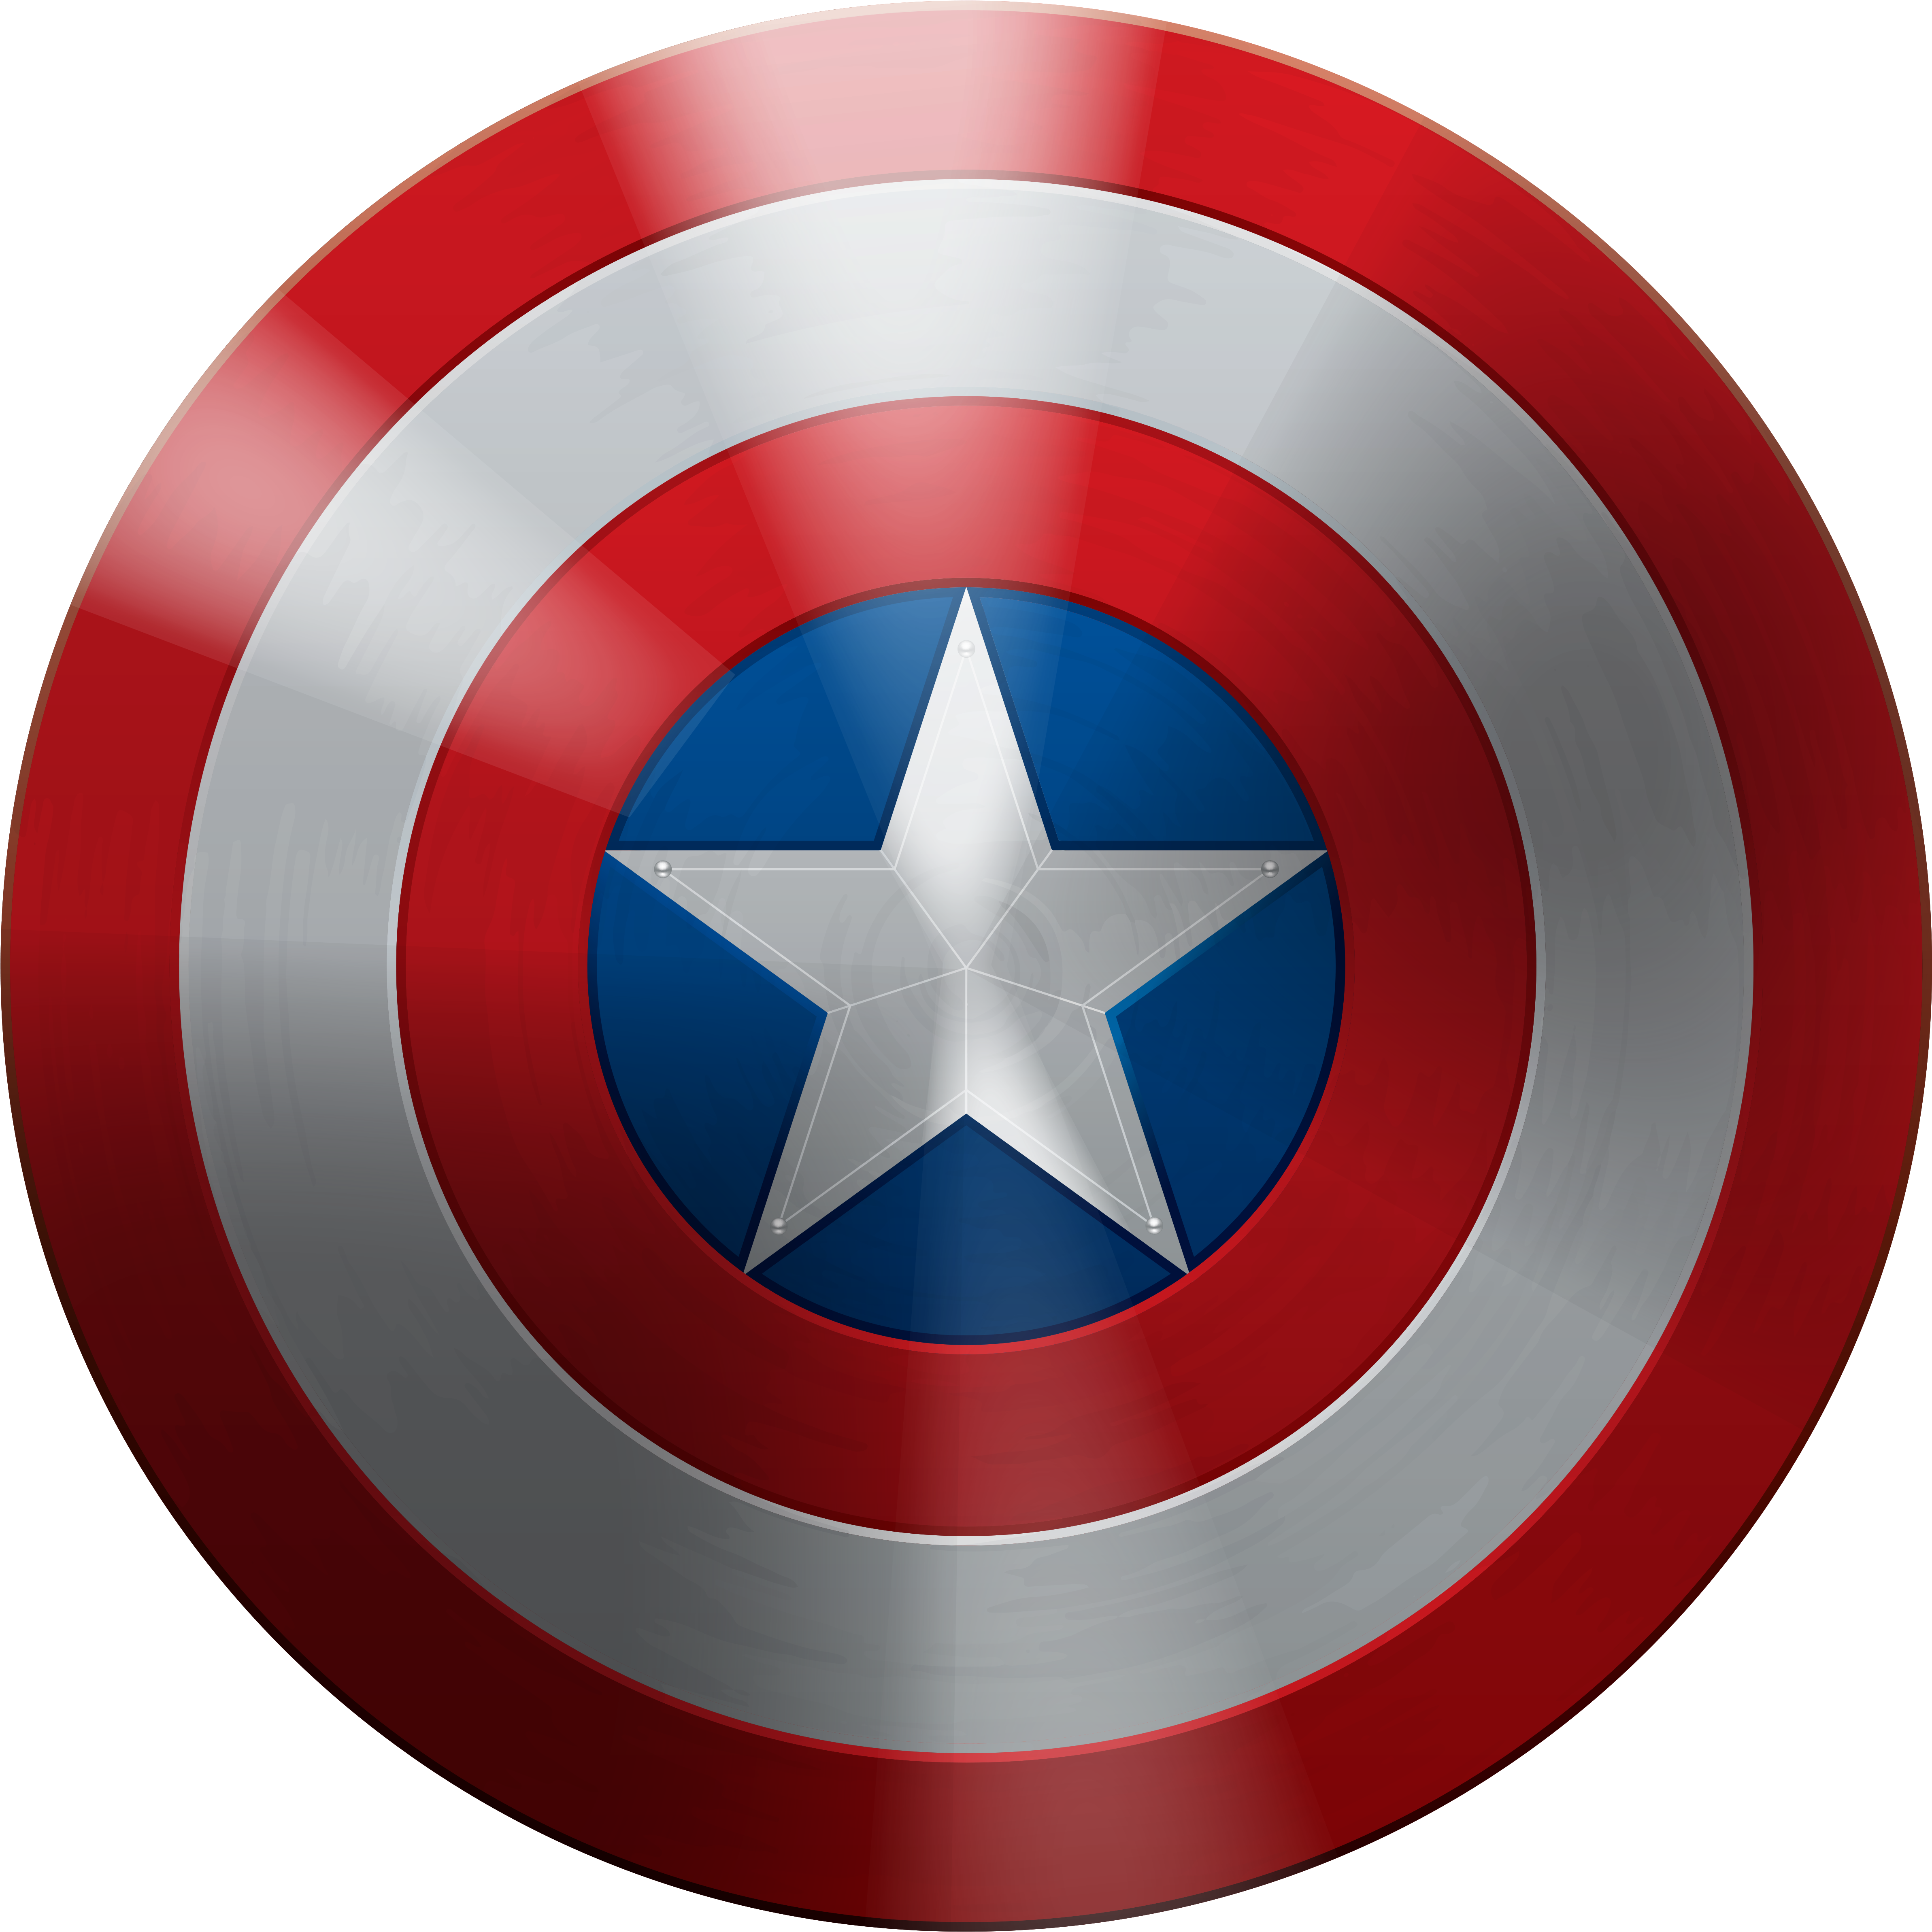 Captain America Shield Clip Art My Site - Captain America Shield Png (5400x5400)